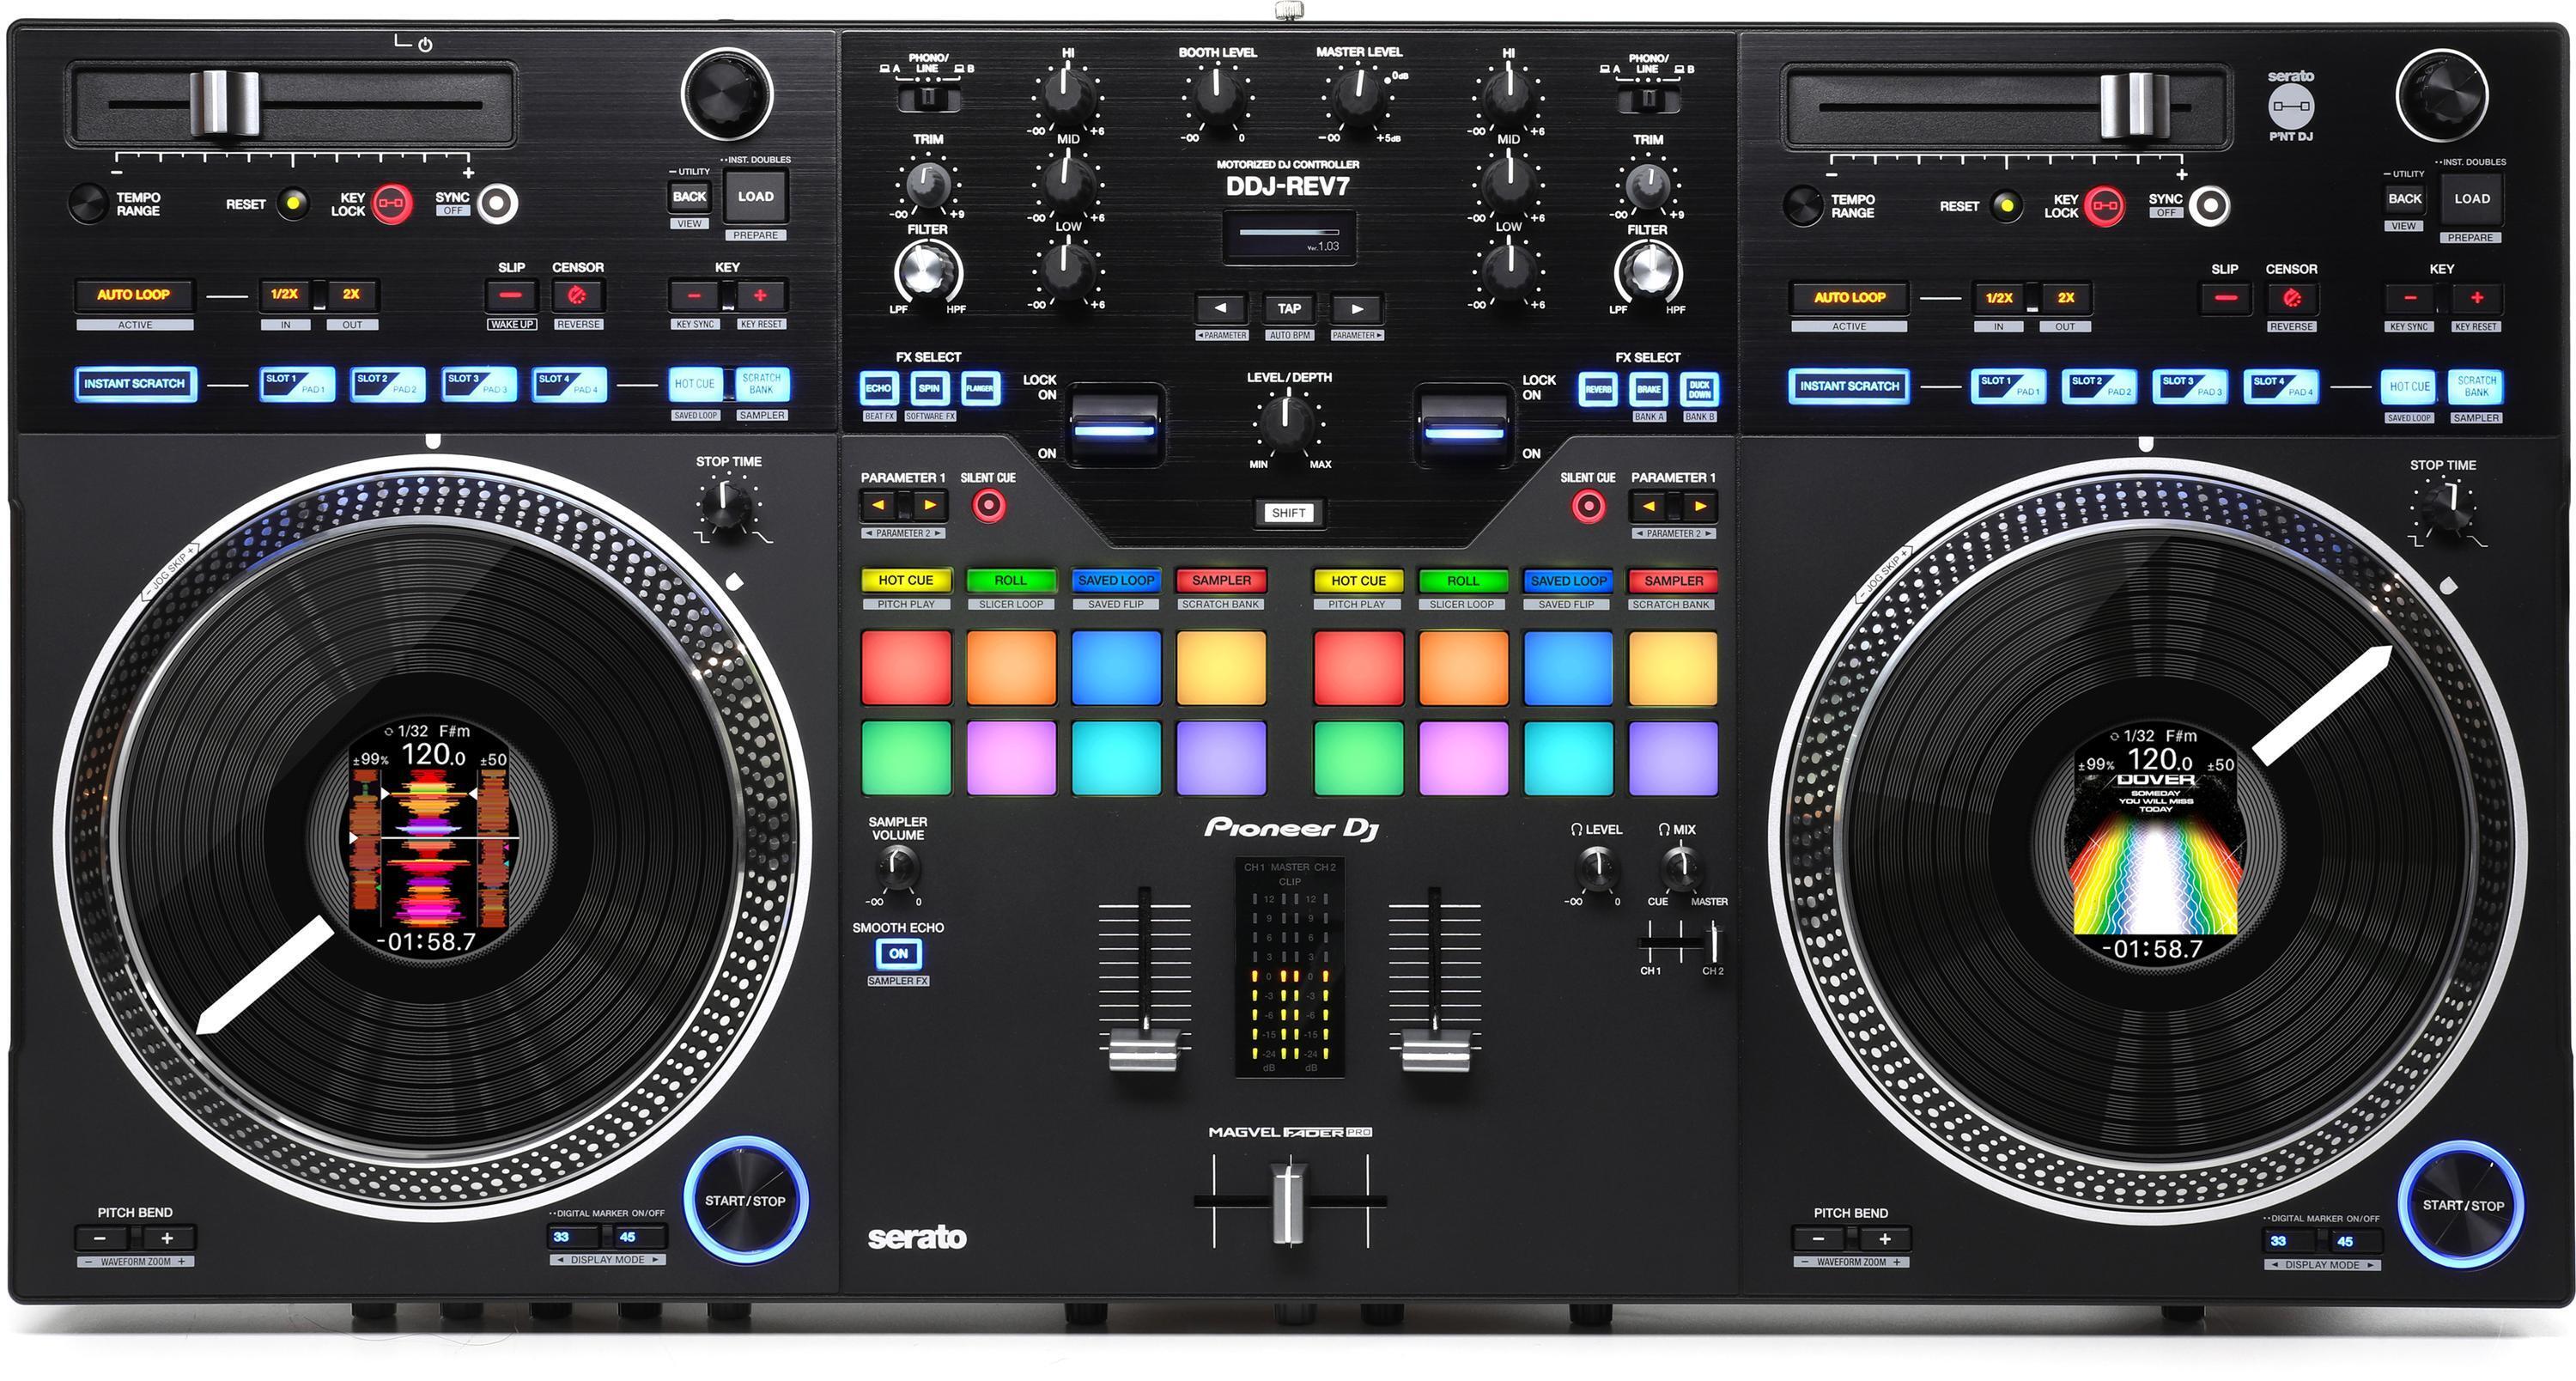 Pioneer DJ DDJ-REV1-N Serato Performance DJ Controller in Limited